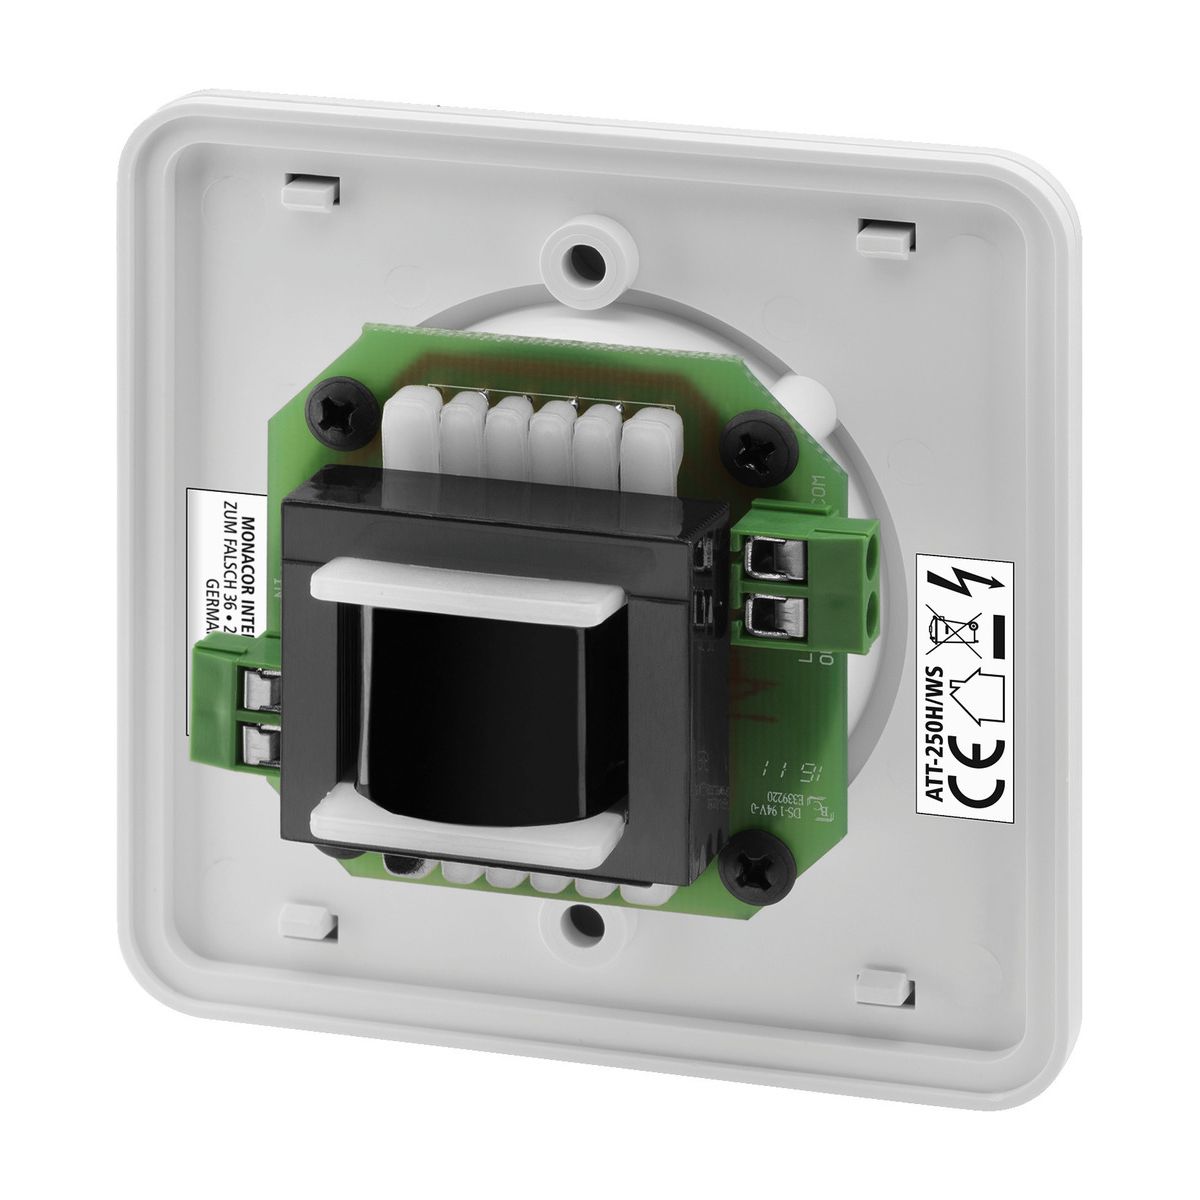 ATT-250H/WS | Wall-mounted PA volume control, 50 W-6447